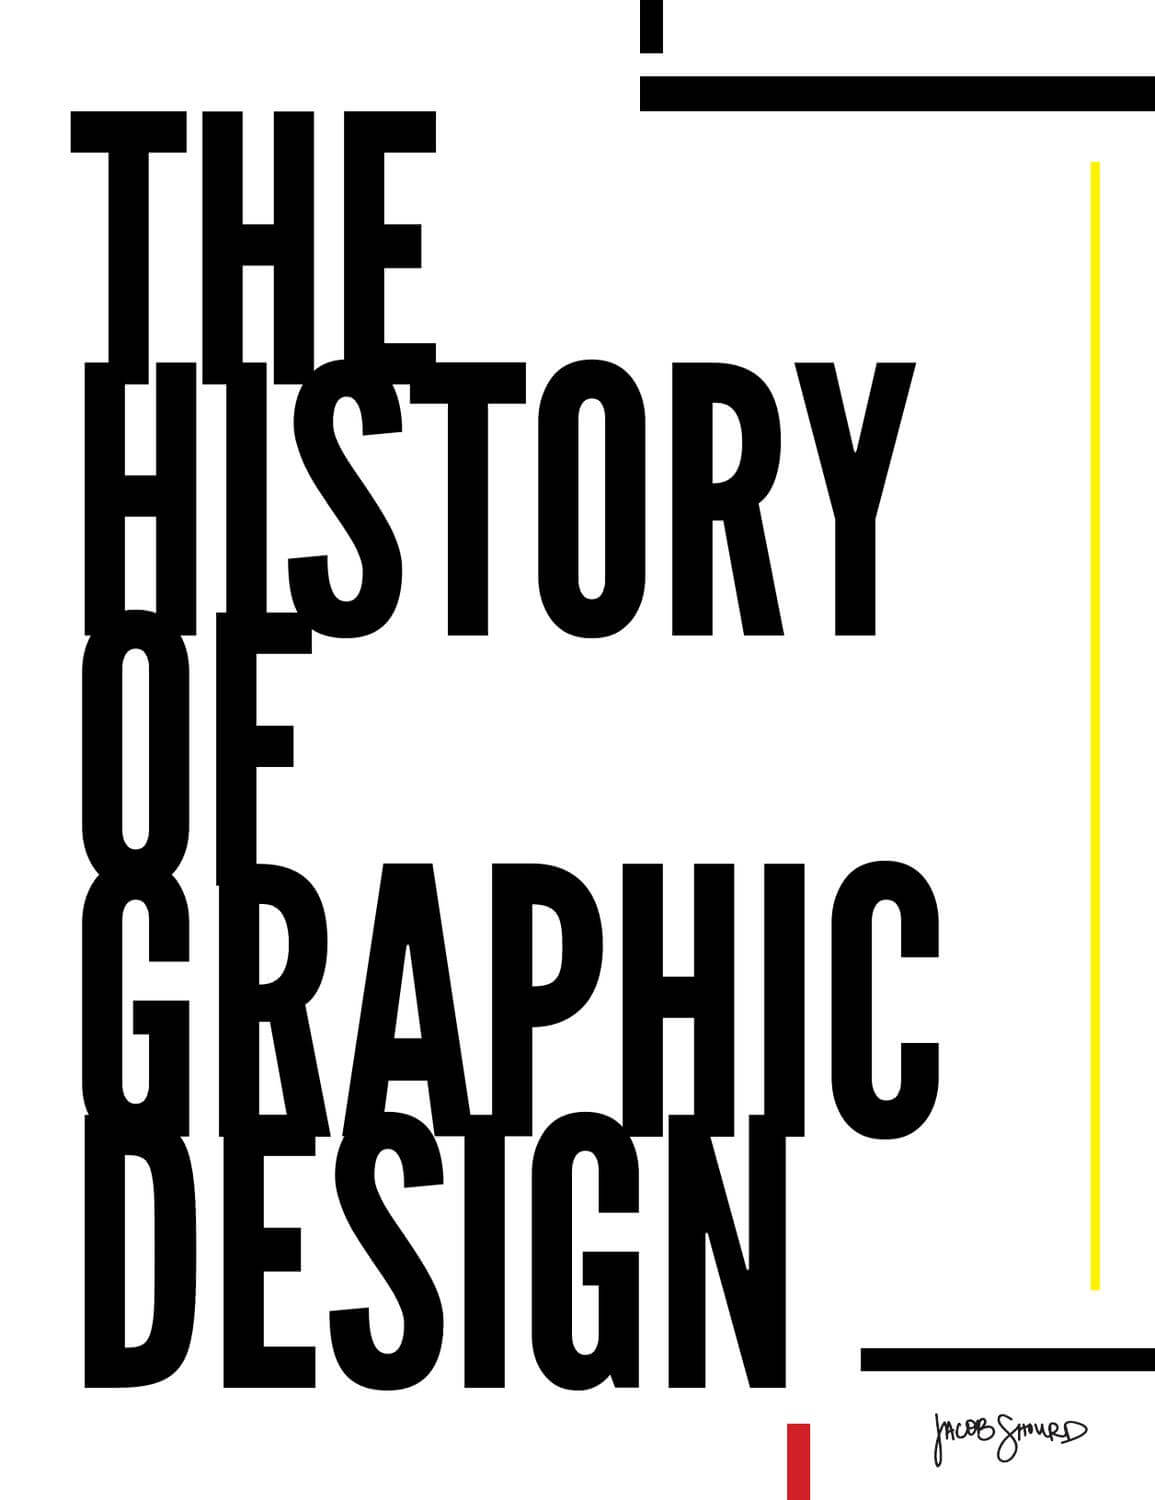 E-book design examples 31